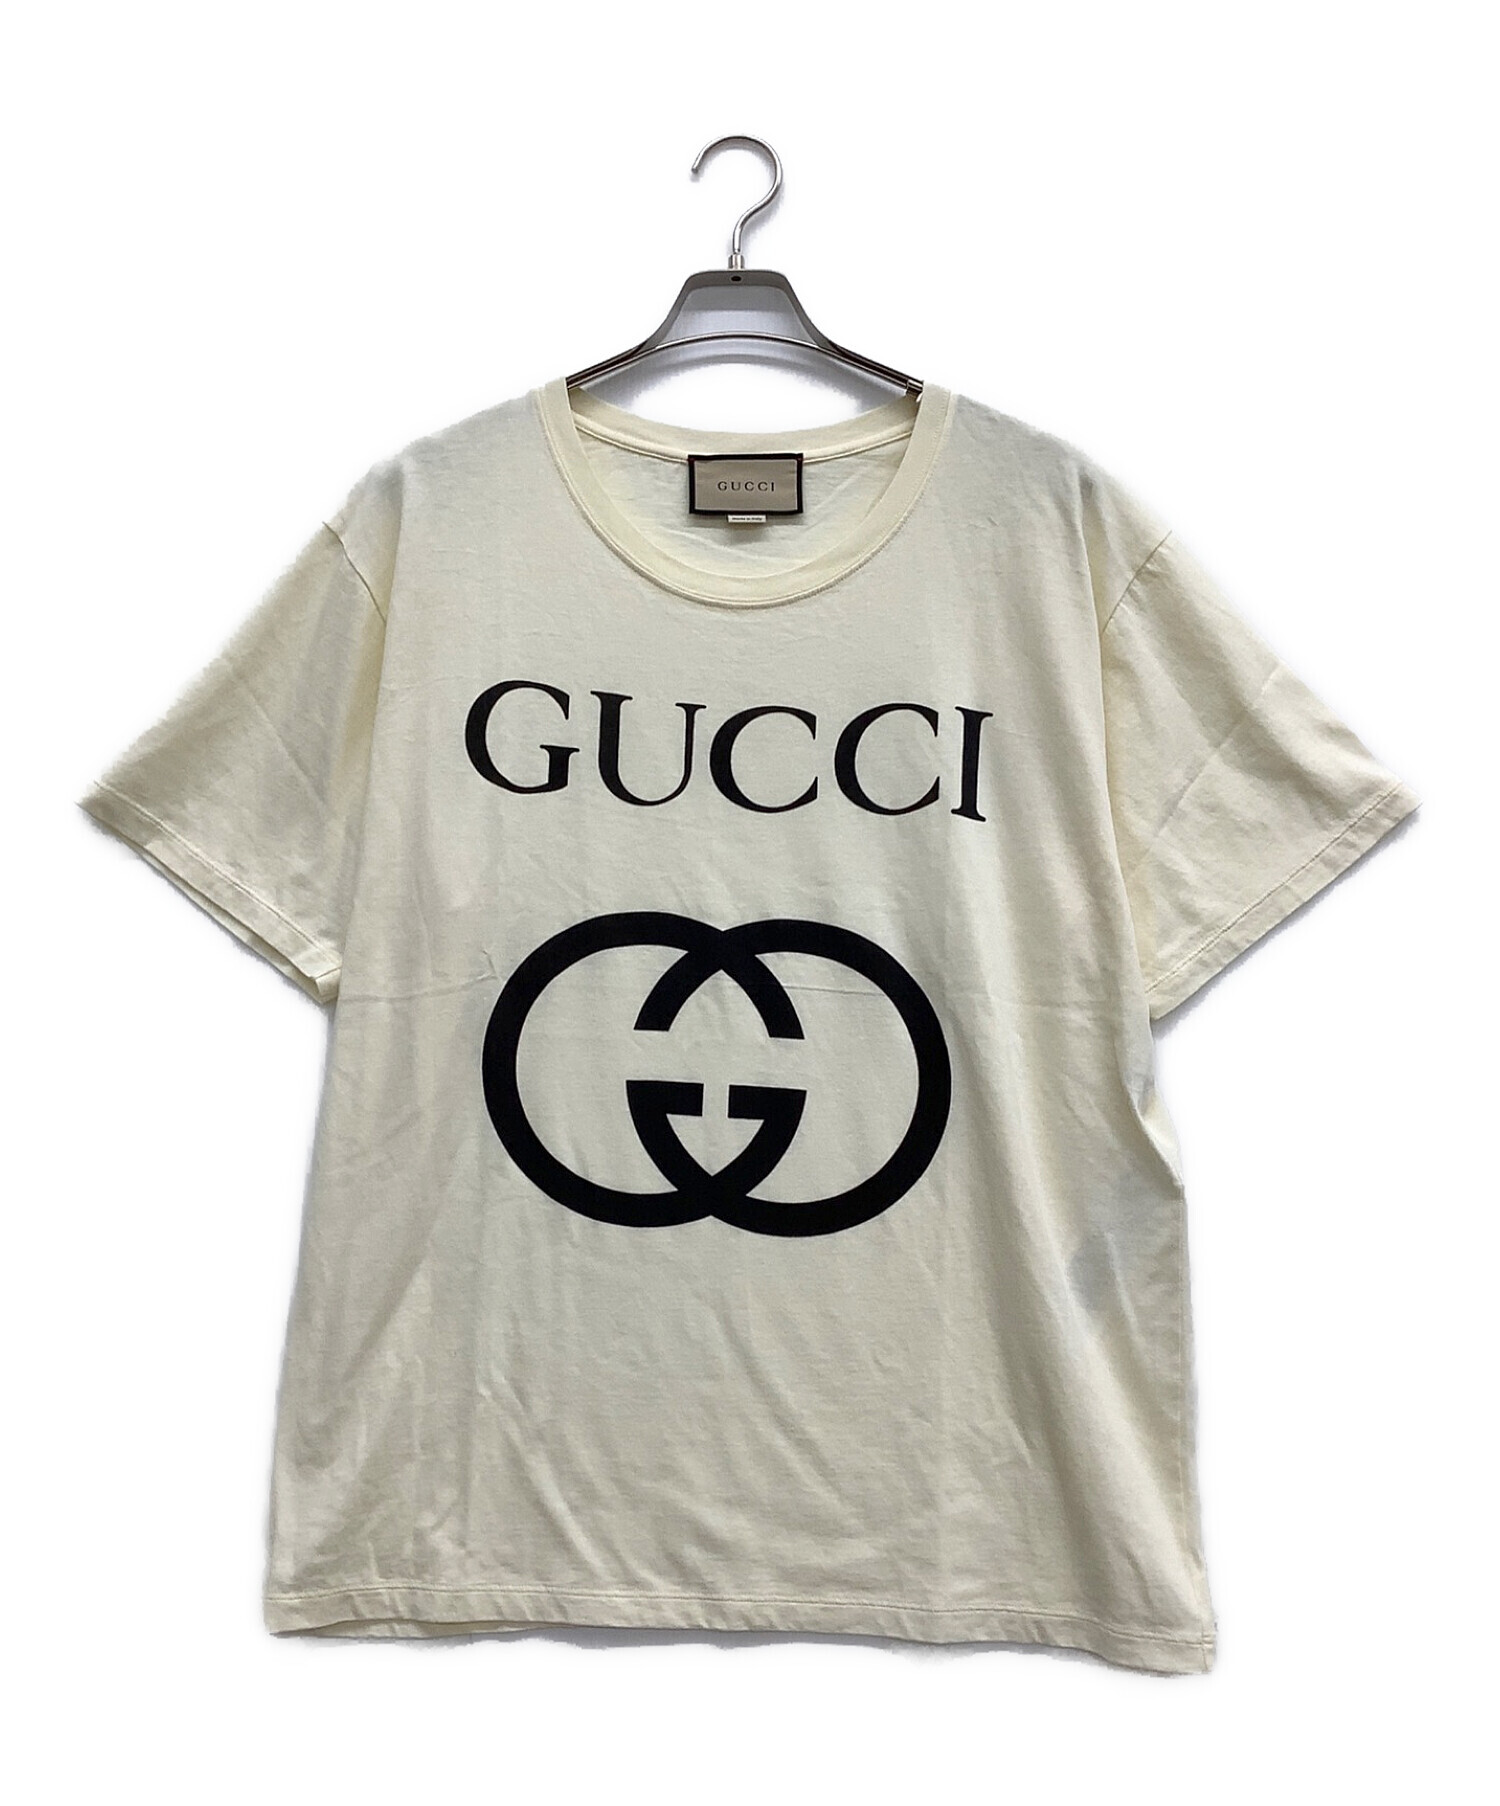 GUCCI グッチ ブランドロゴTシャツ イタリア製 XXXL-